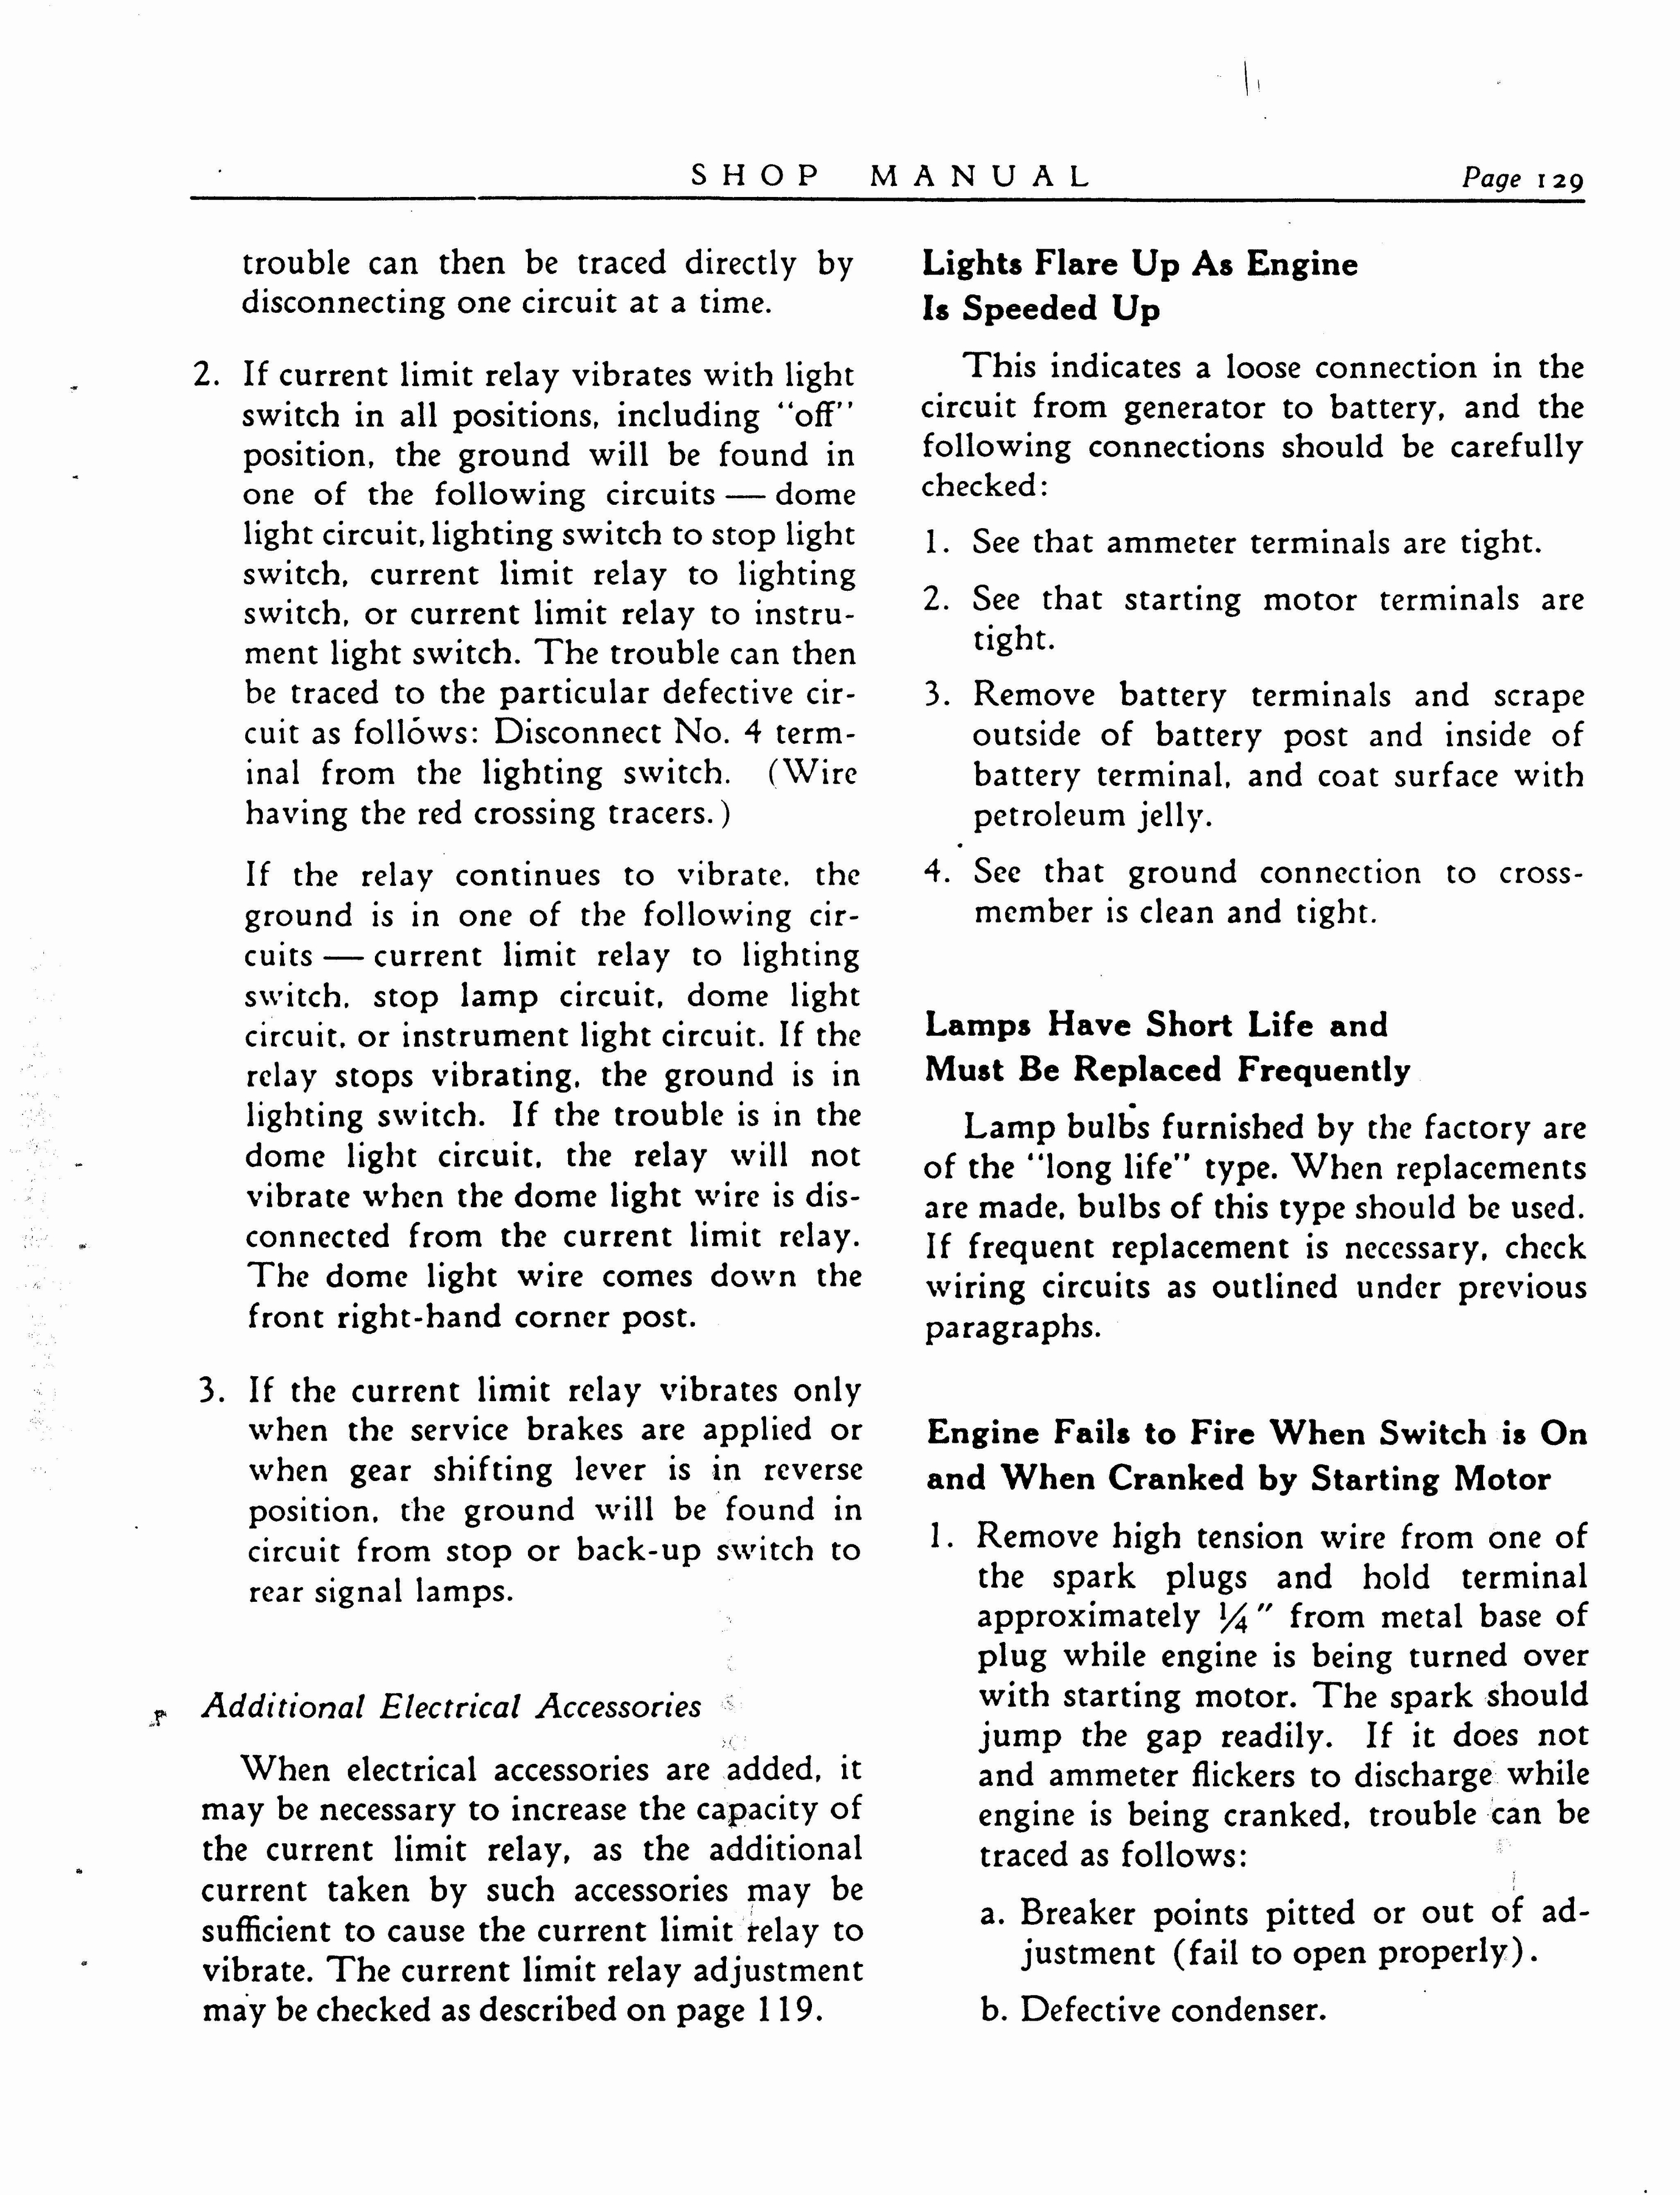 n_1933 Buick Shop Manual_Page_130.jpg